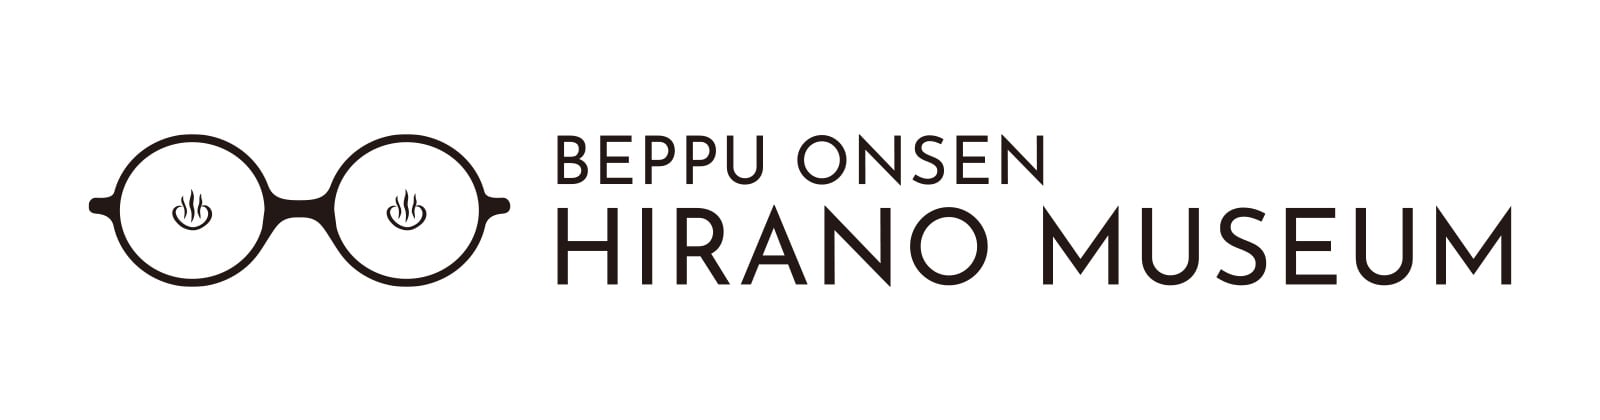 hirano-museum